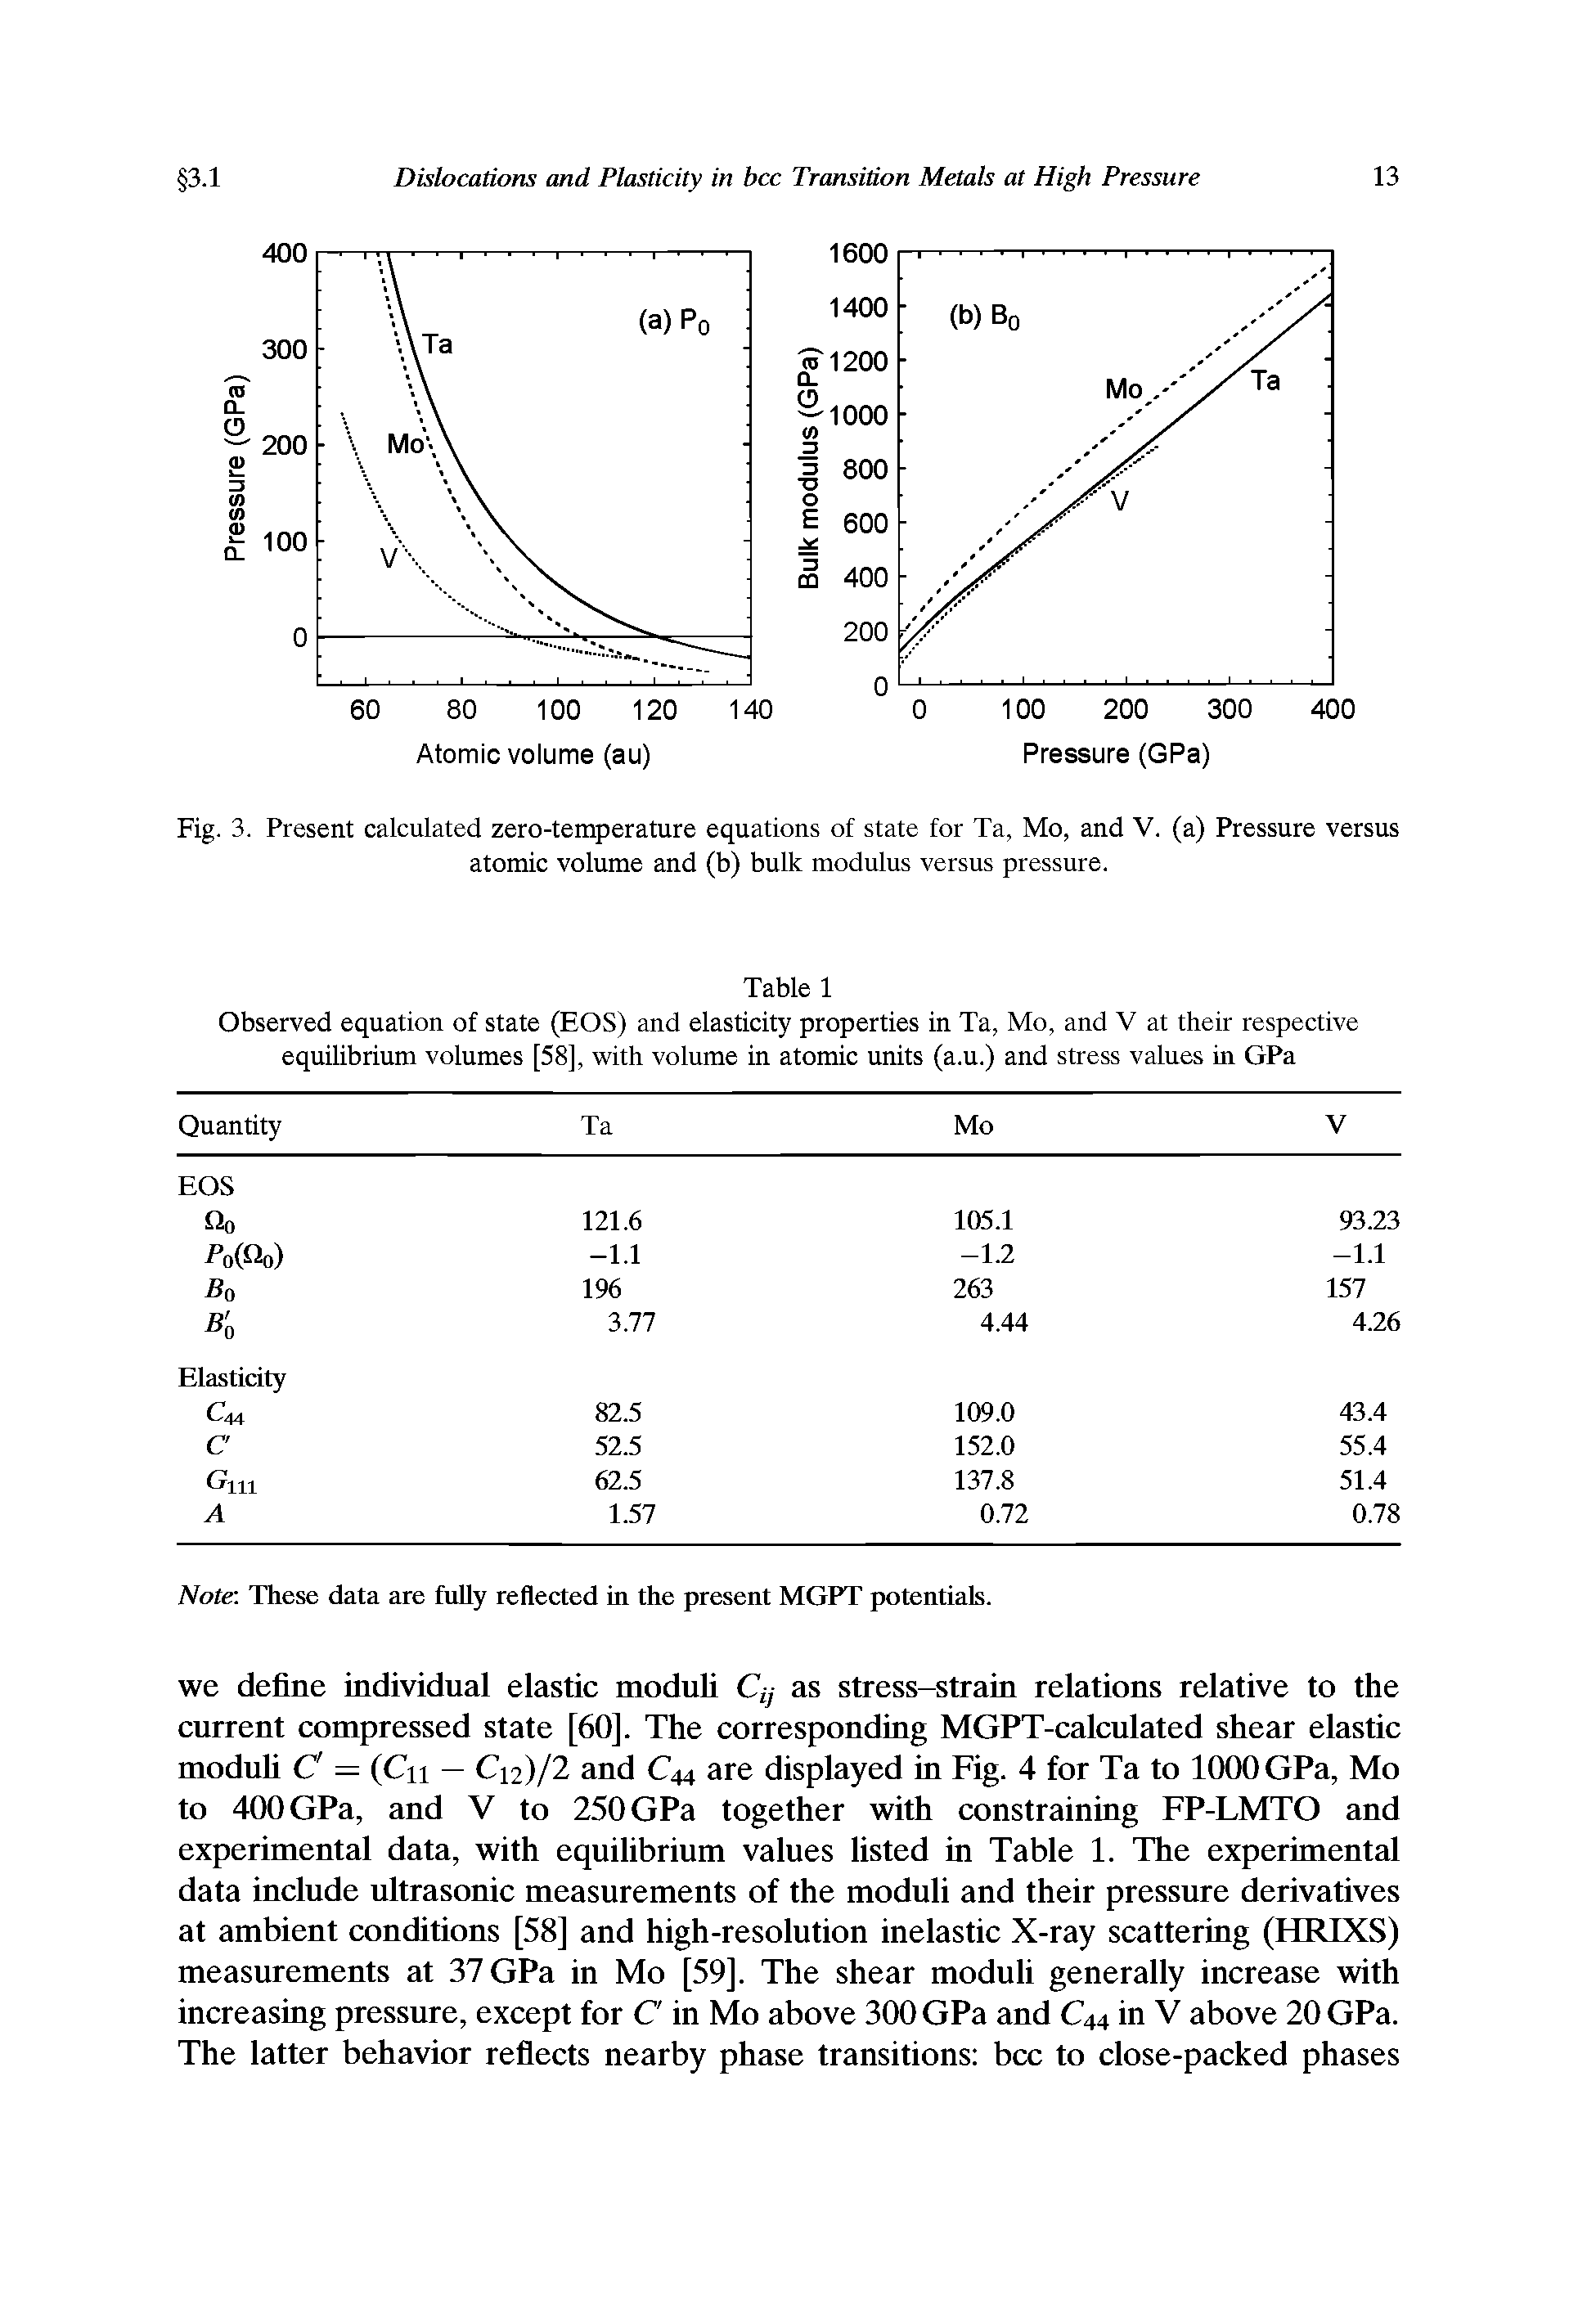 Fig. 3. Present calculated zero-temperature equations of state for Ta, Mo, and V. (a) Pressure versus atomic volume and (b) bulk modulus versus pressure.